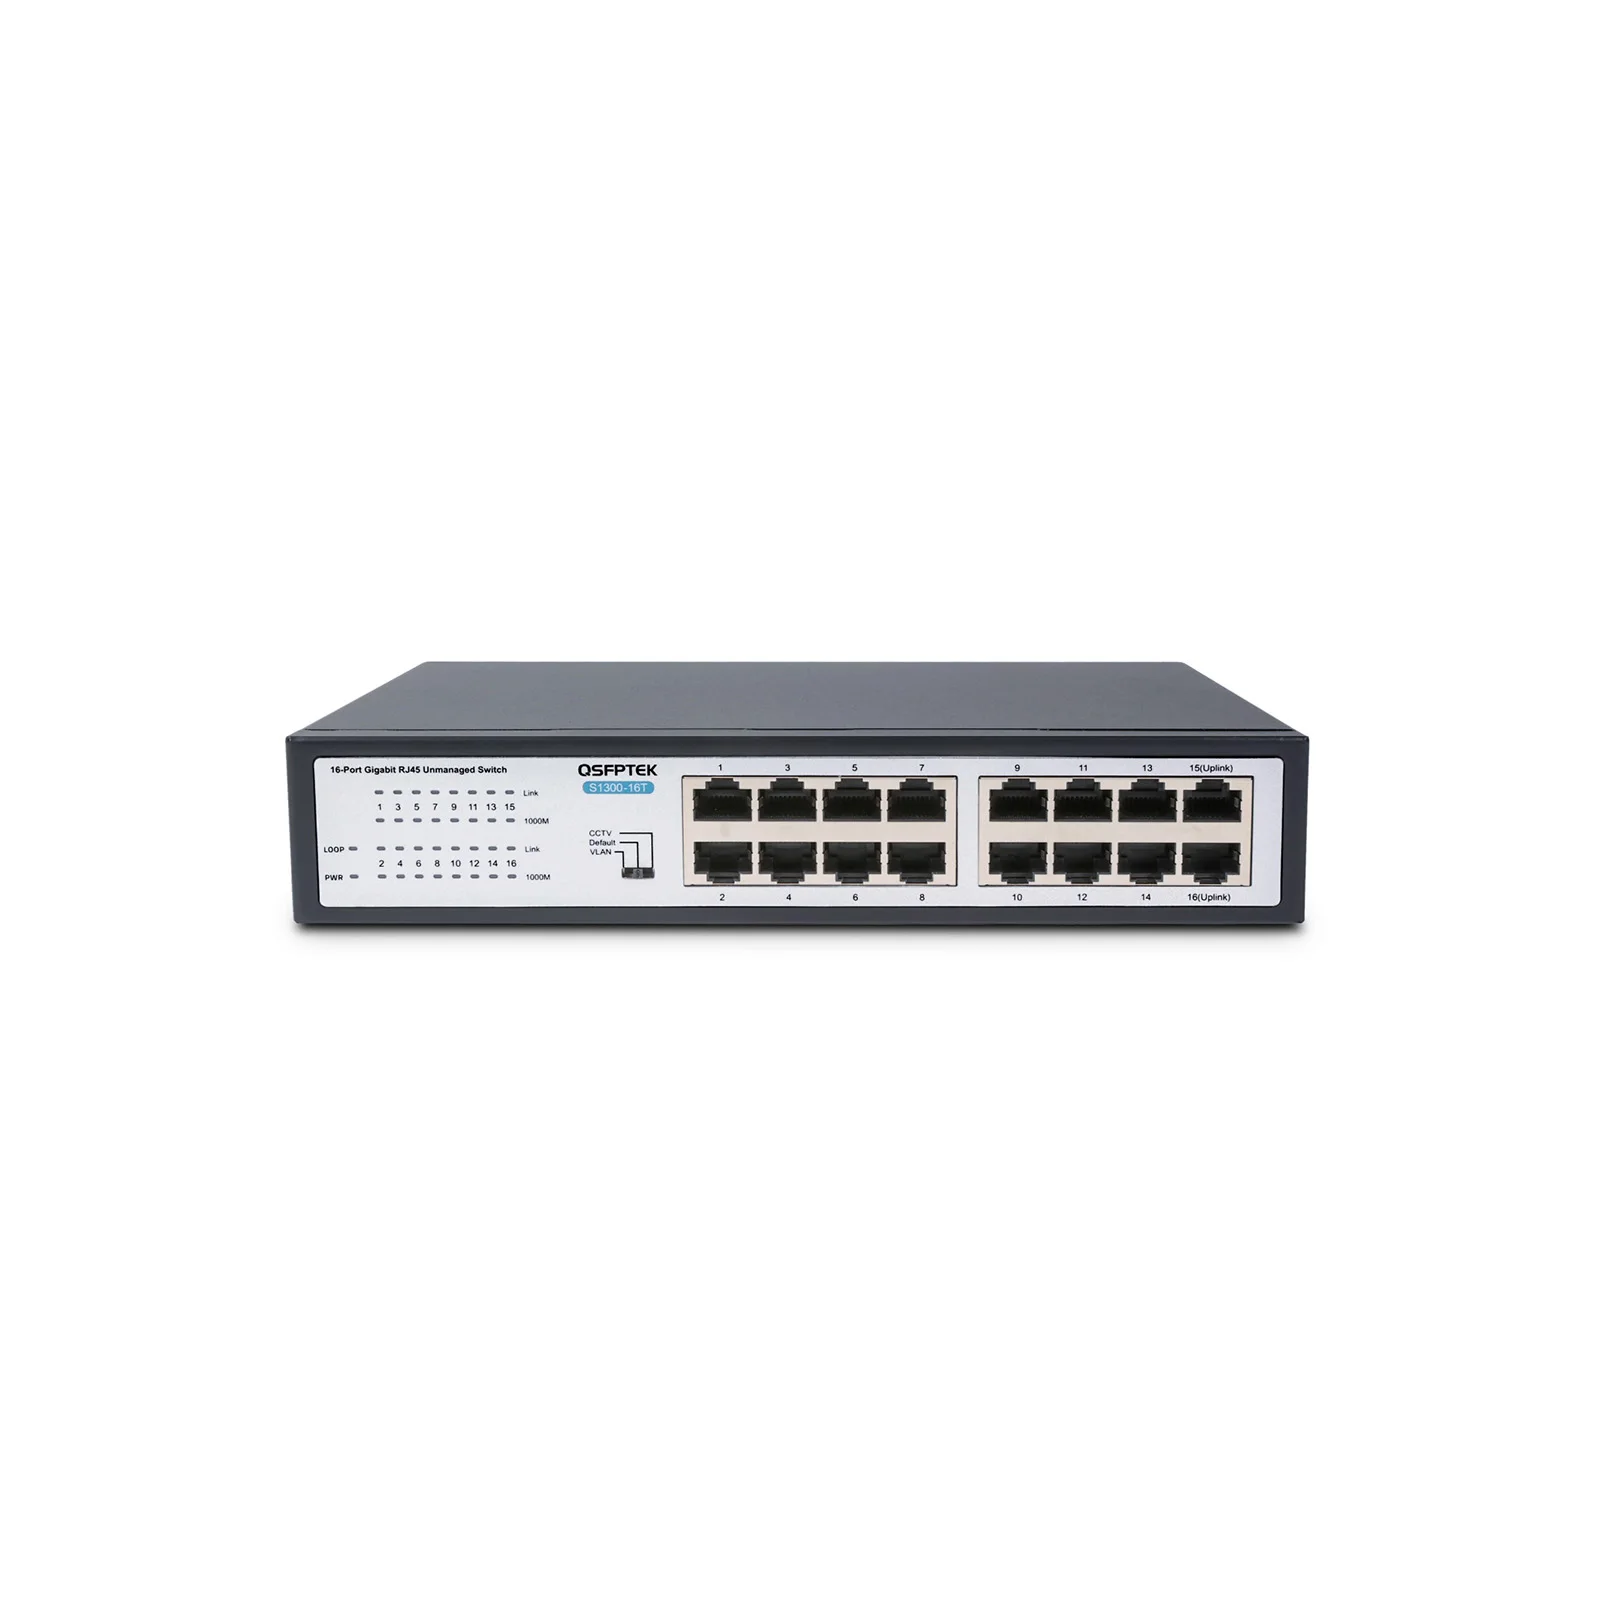 Switch Ethernet rackable 10' & 19' 16 Ports RJ45 Gigabit